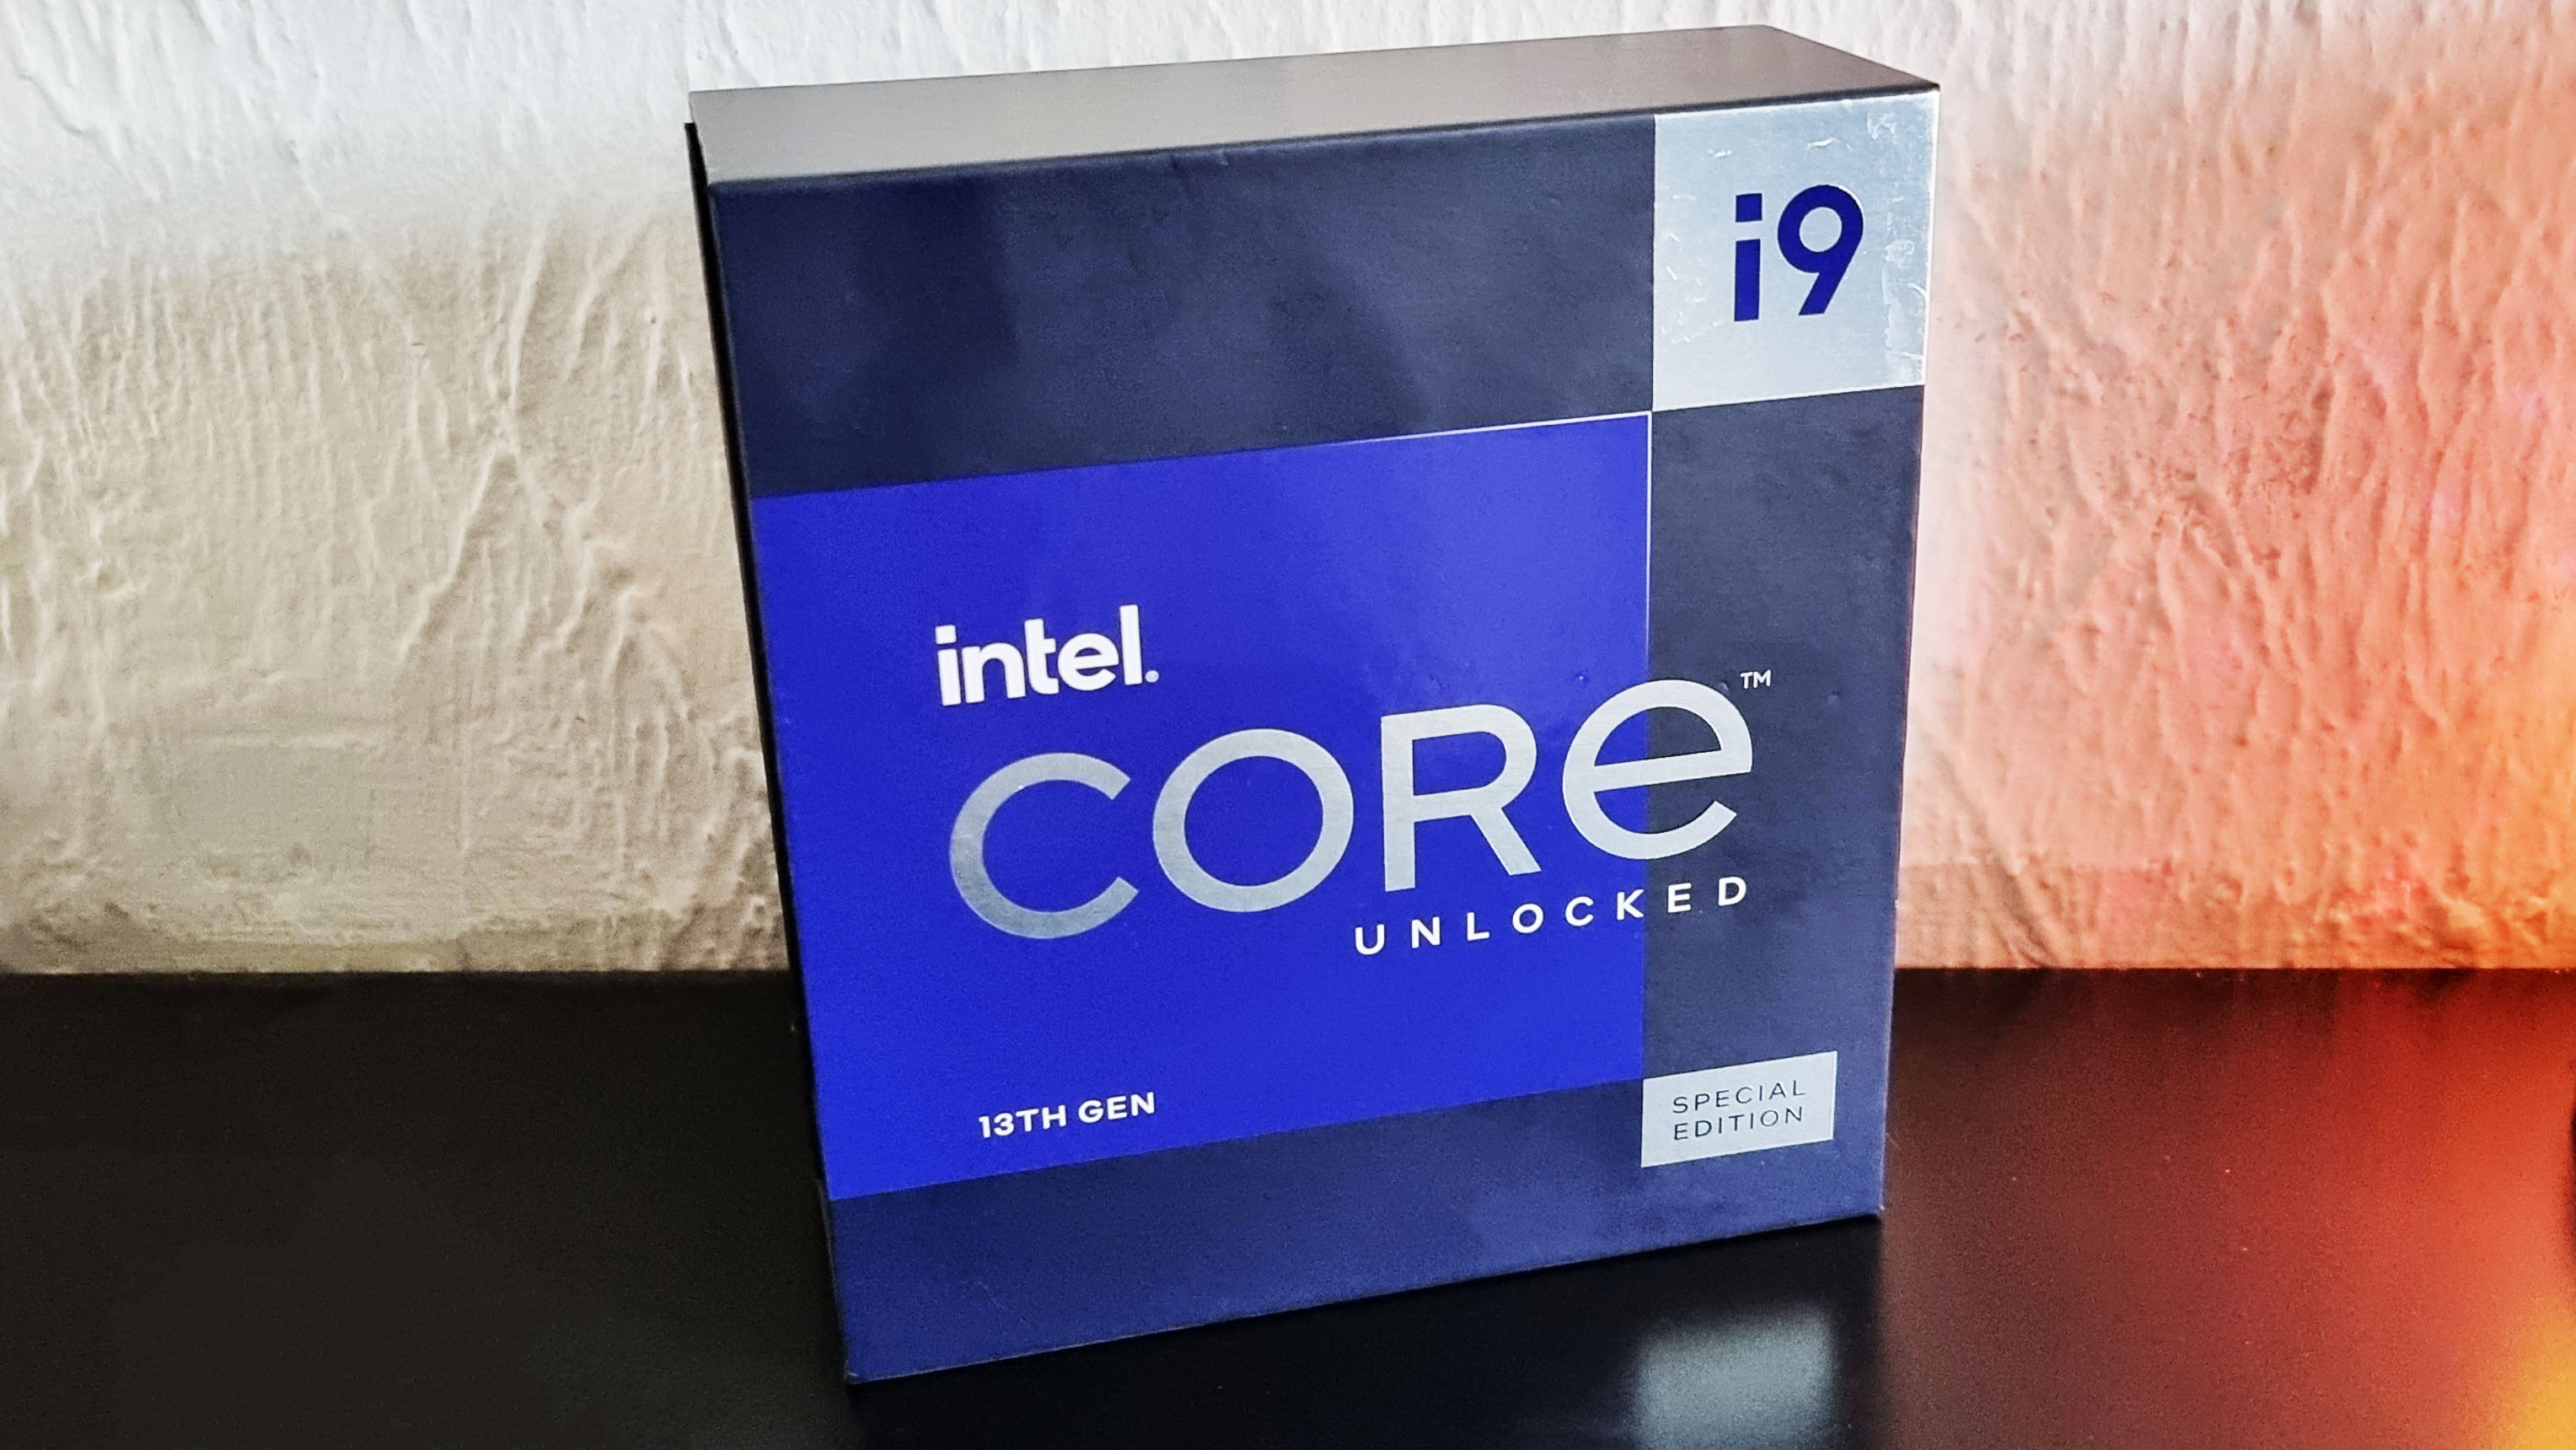 Intel Core i9-13900KS, the world's fastest desktop processor by